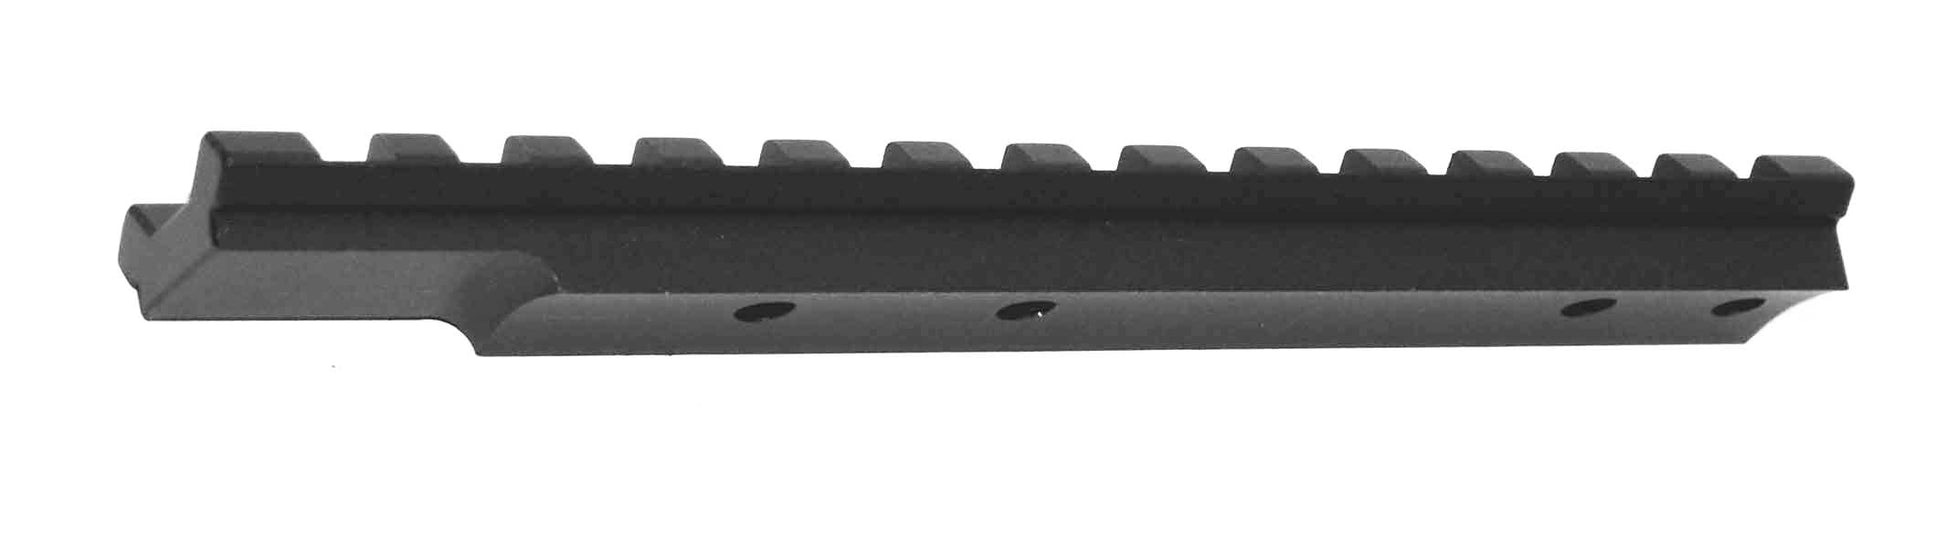 remington 4 picatinny rail.